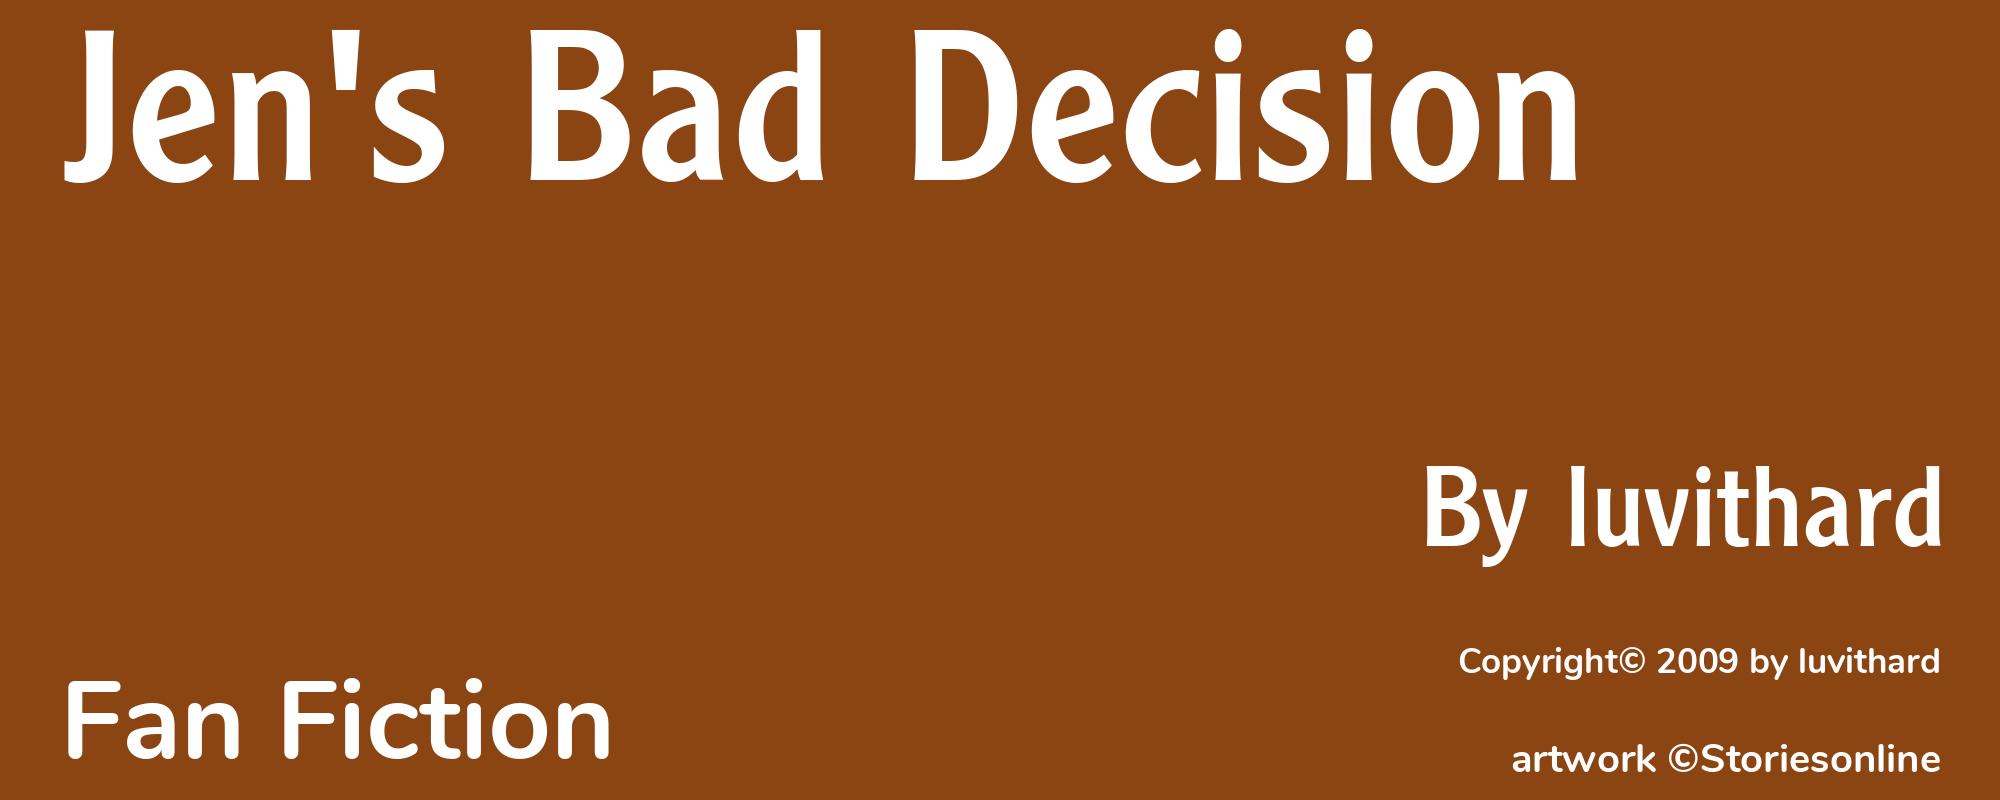 Jen's Bad Decision - Cover